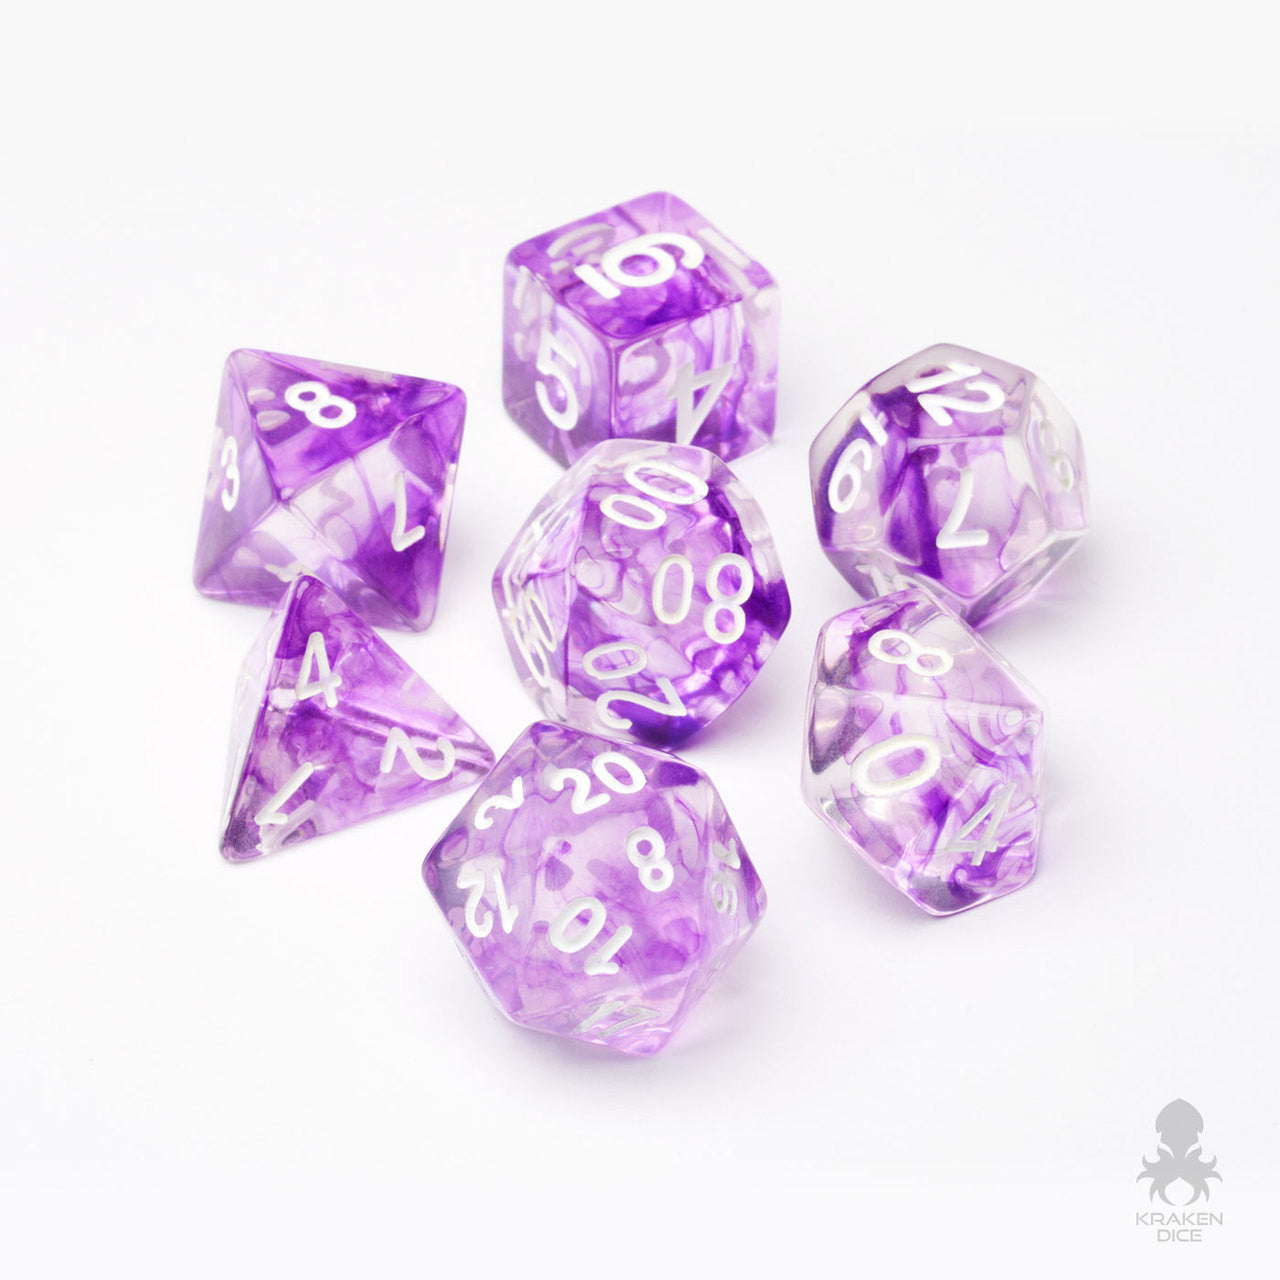 Nebula Purple 7pc Dice Set Inked in White